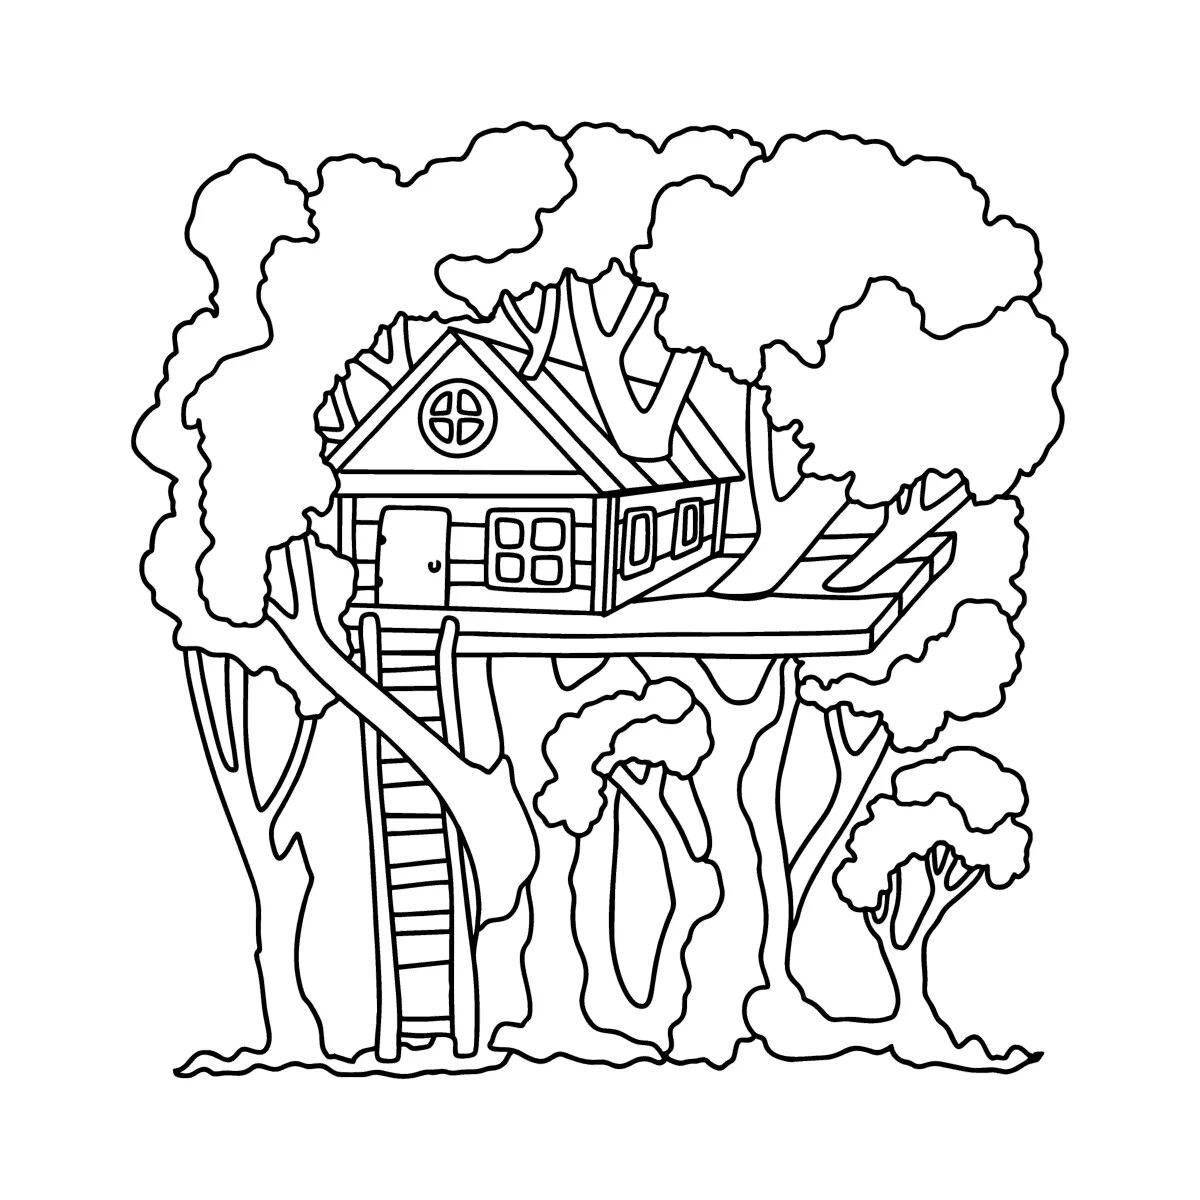 Tree house #1